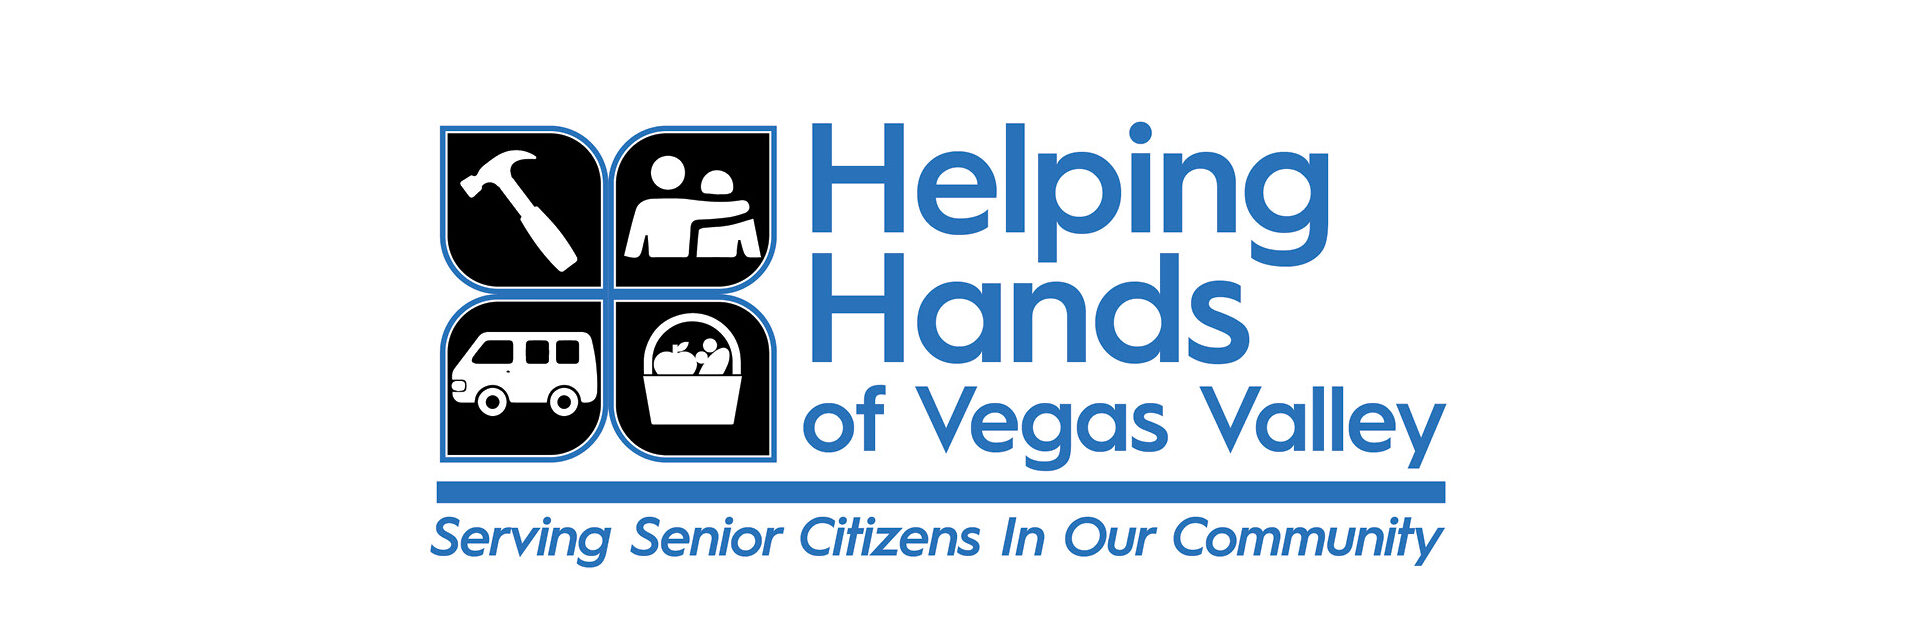 Helping Hands of Vegas Valley Logo